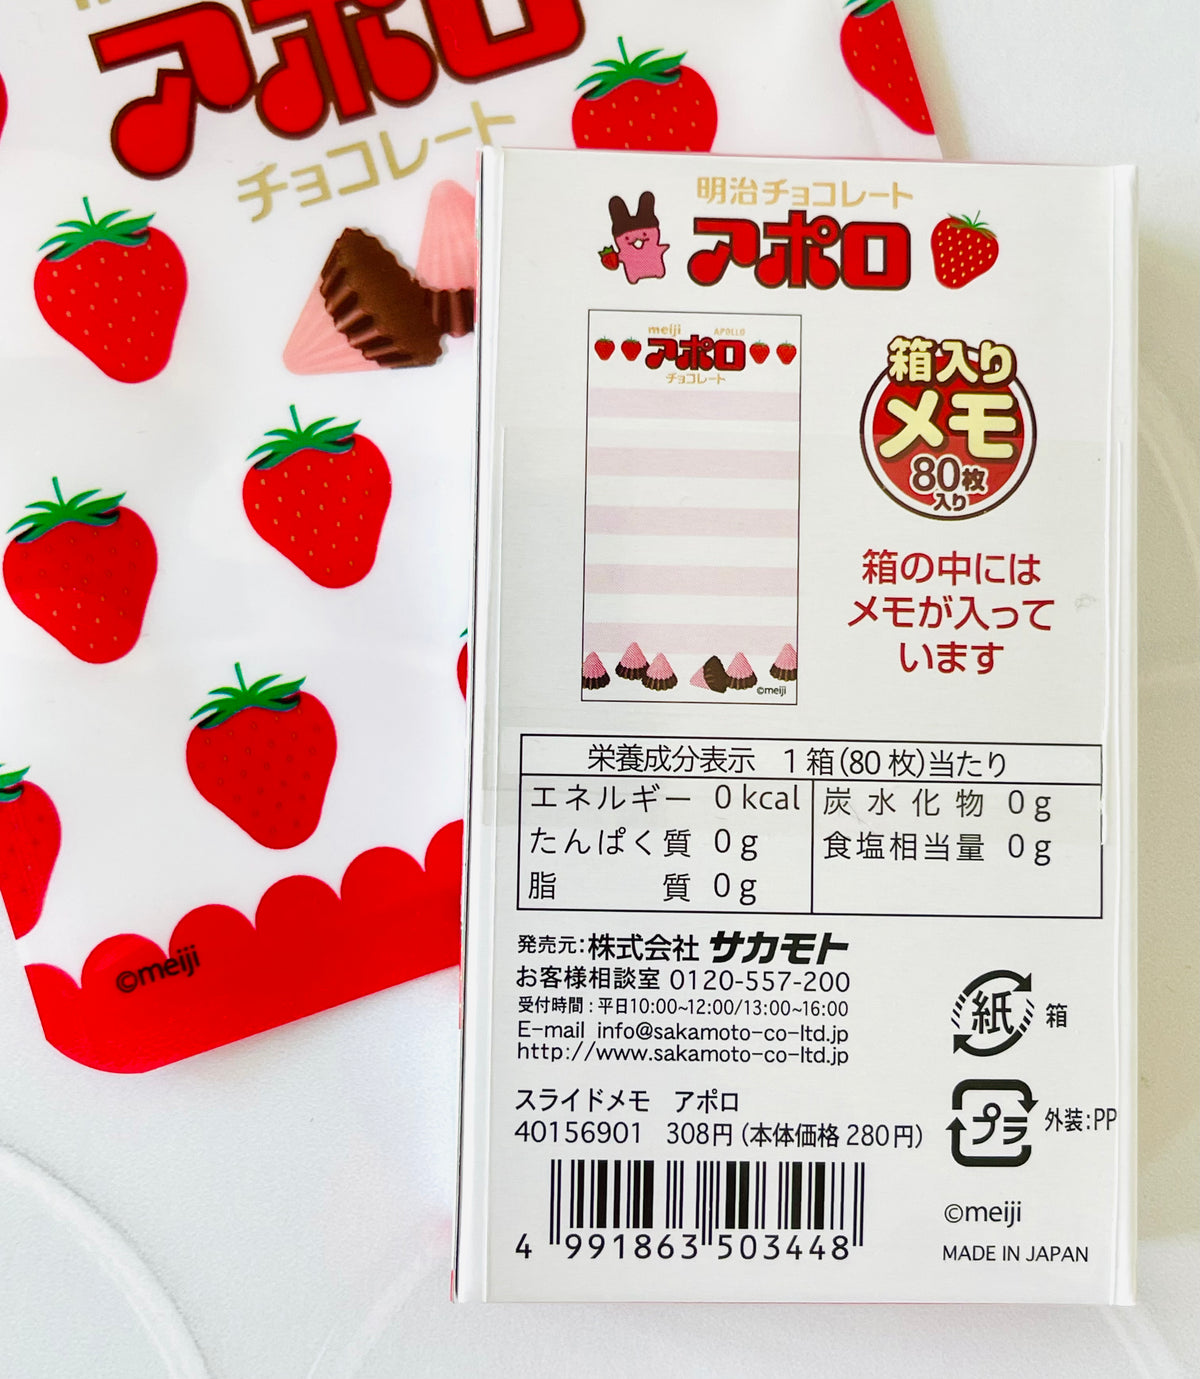 Meiji Candy Memo